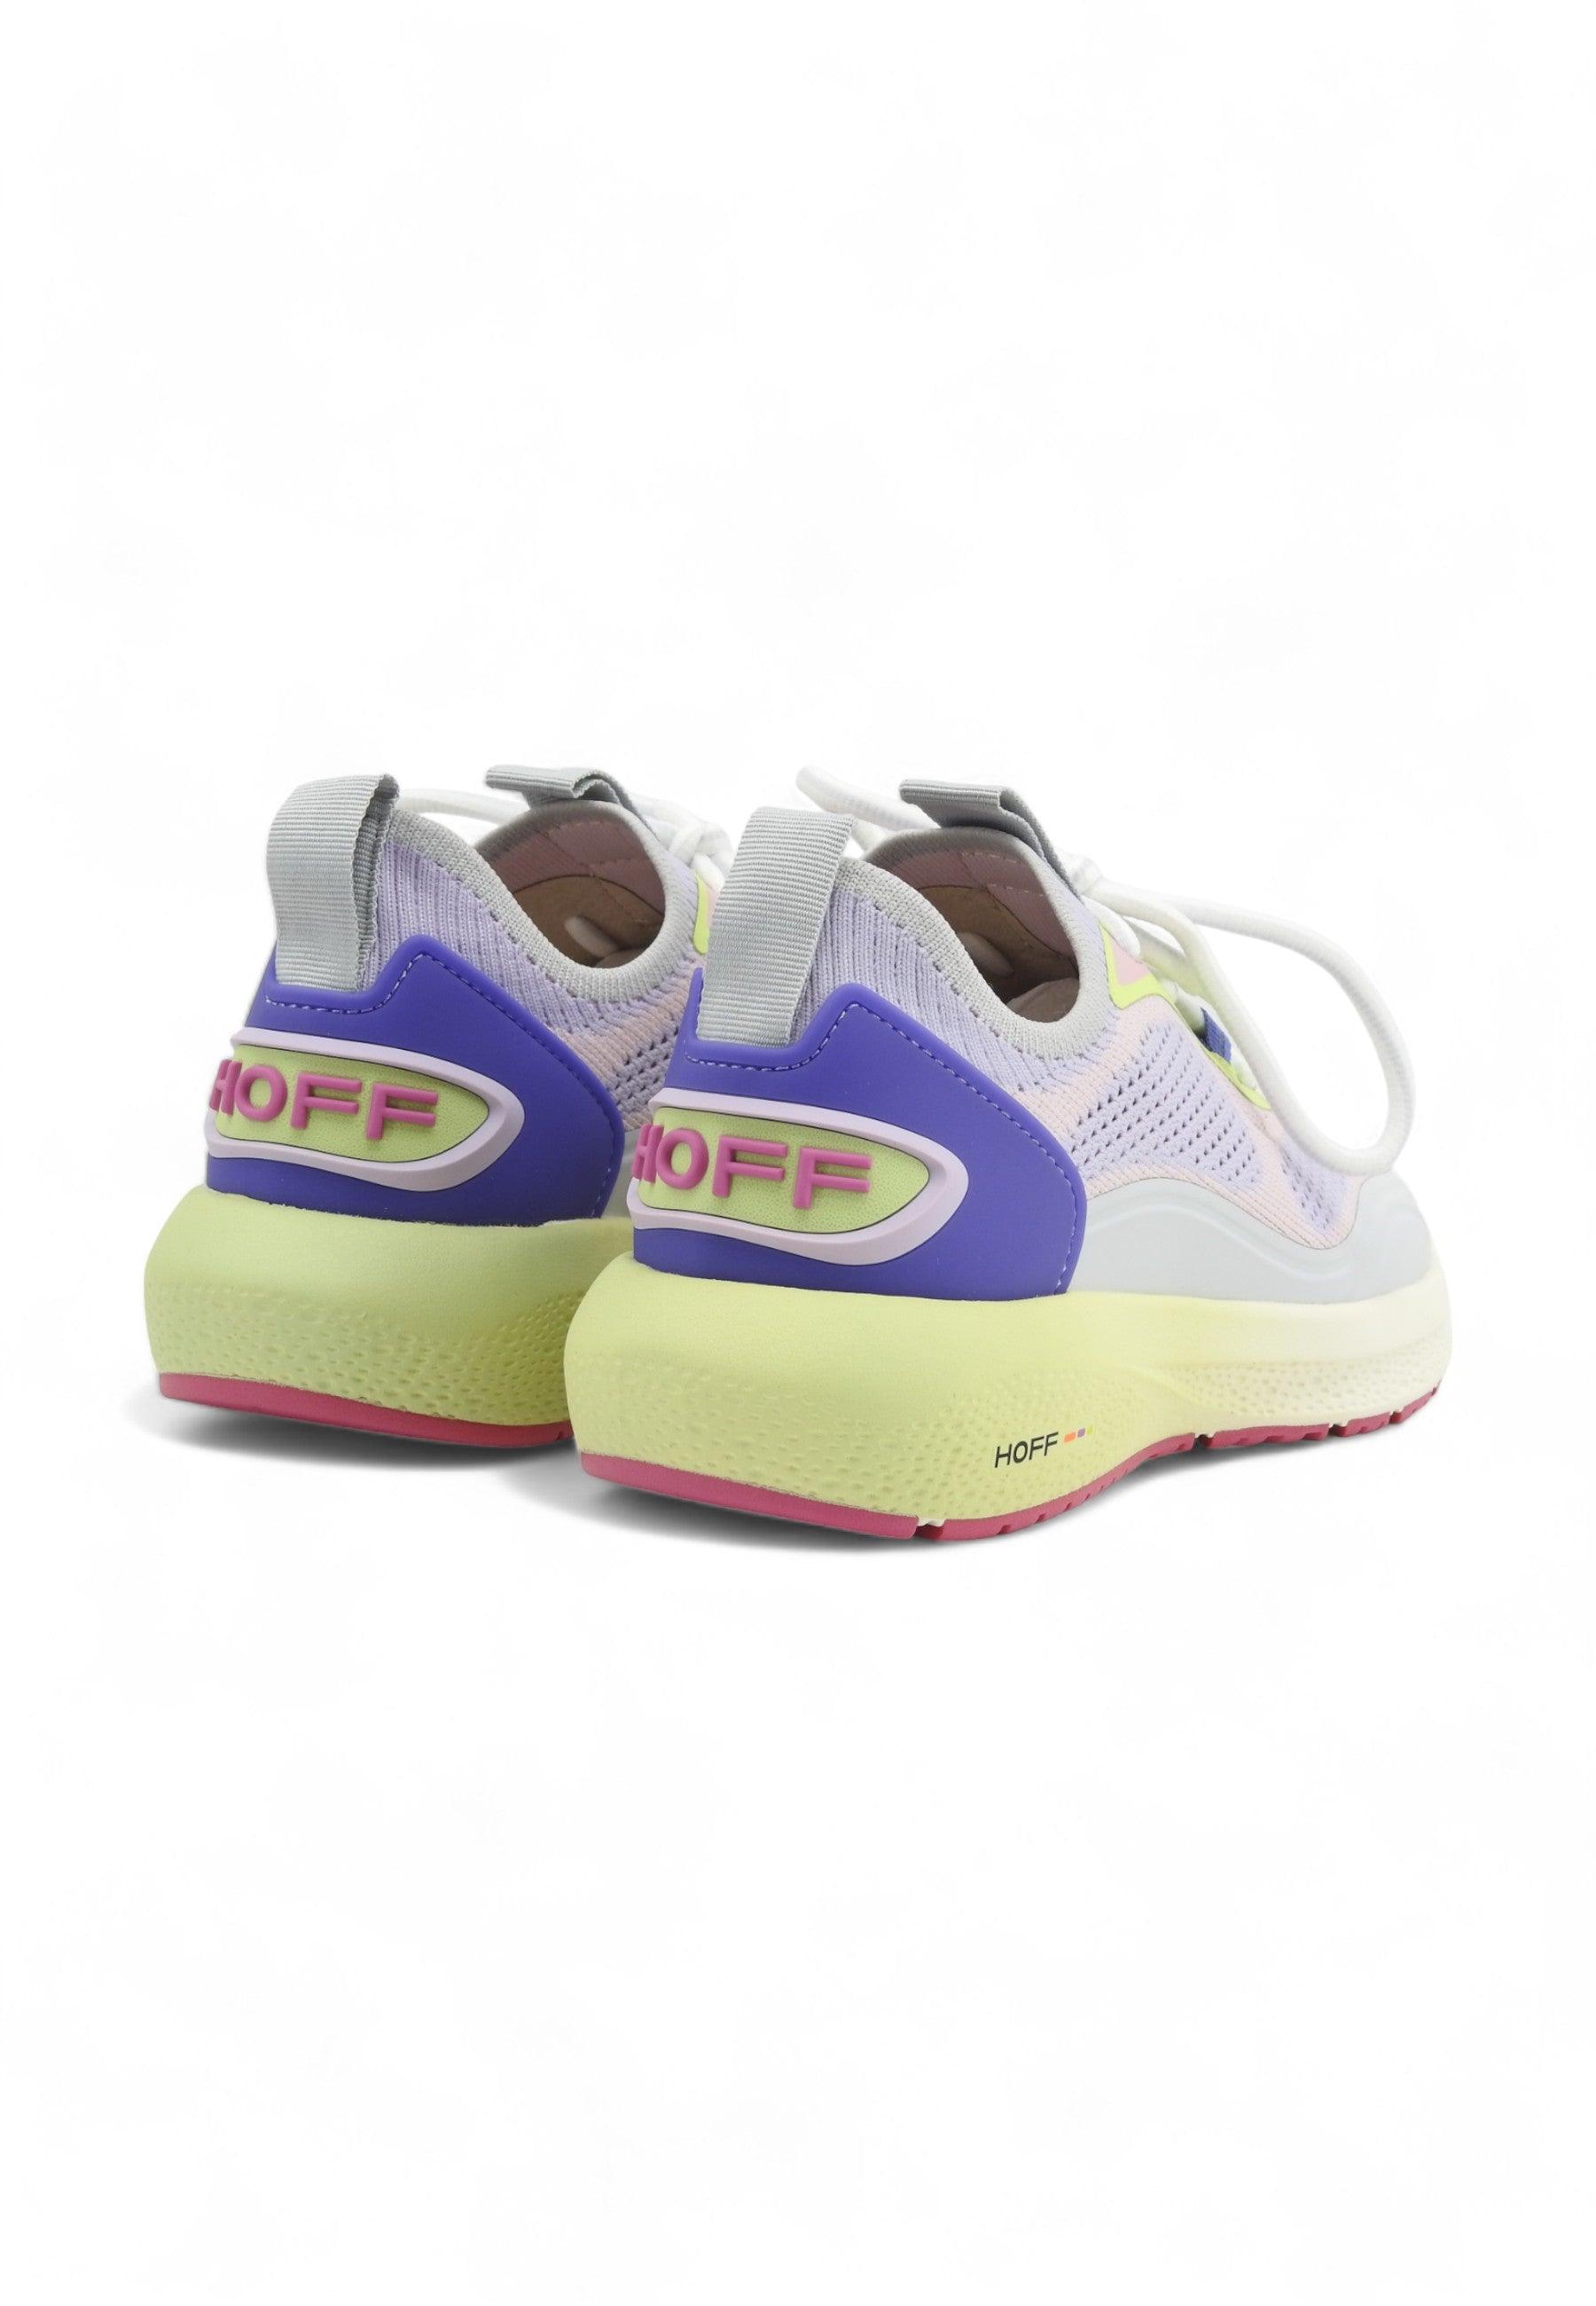 HOFF Lift Sneaker Donna Lilac Rose Fantasia 12418002 - Sandrini Calzature e Abbigliamento